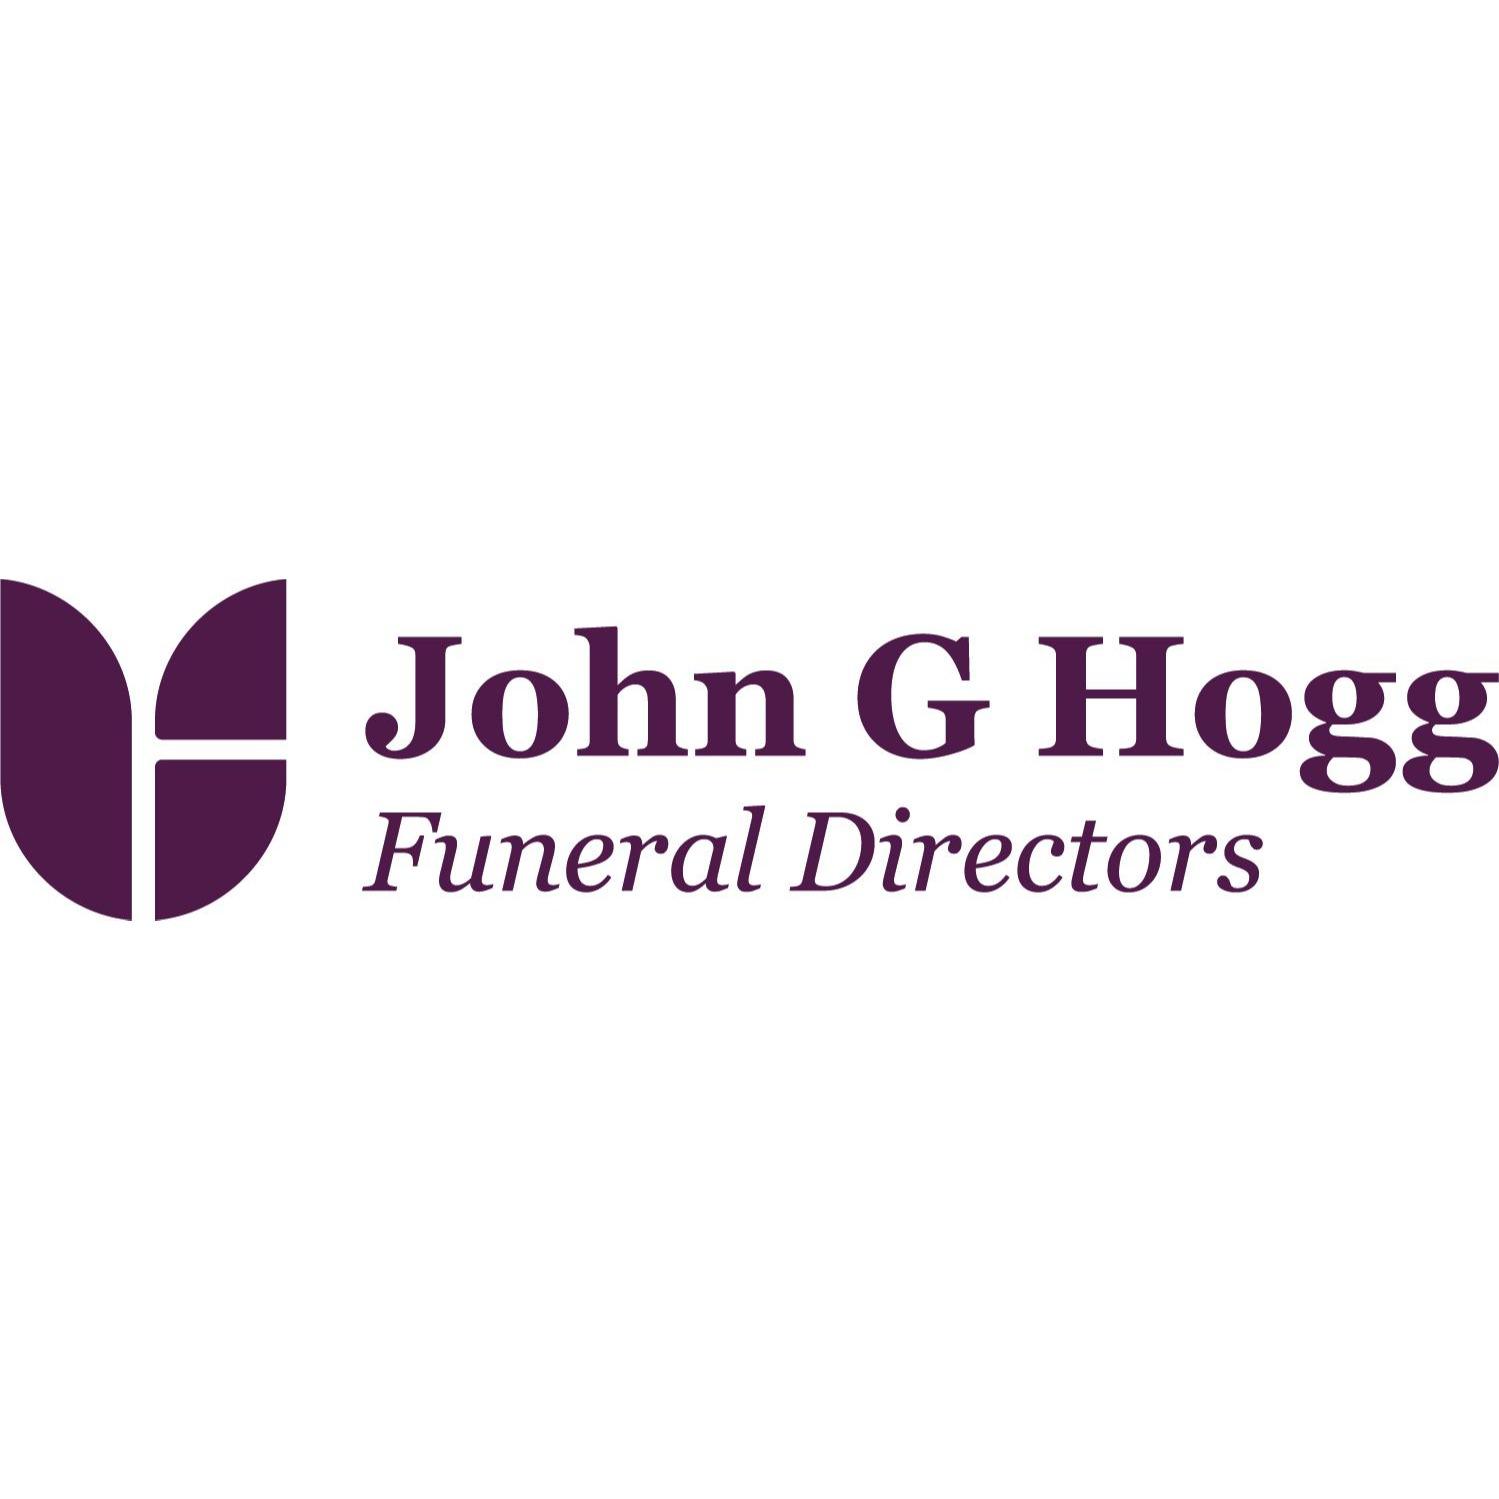 John G Hogg Funeral Directors - Sunderland, Tyne and Wear SR3 3DZ - 01915 110028 | ShowMeLocal.com